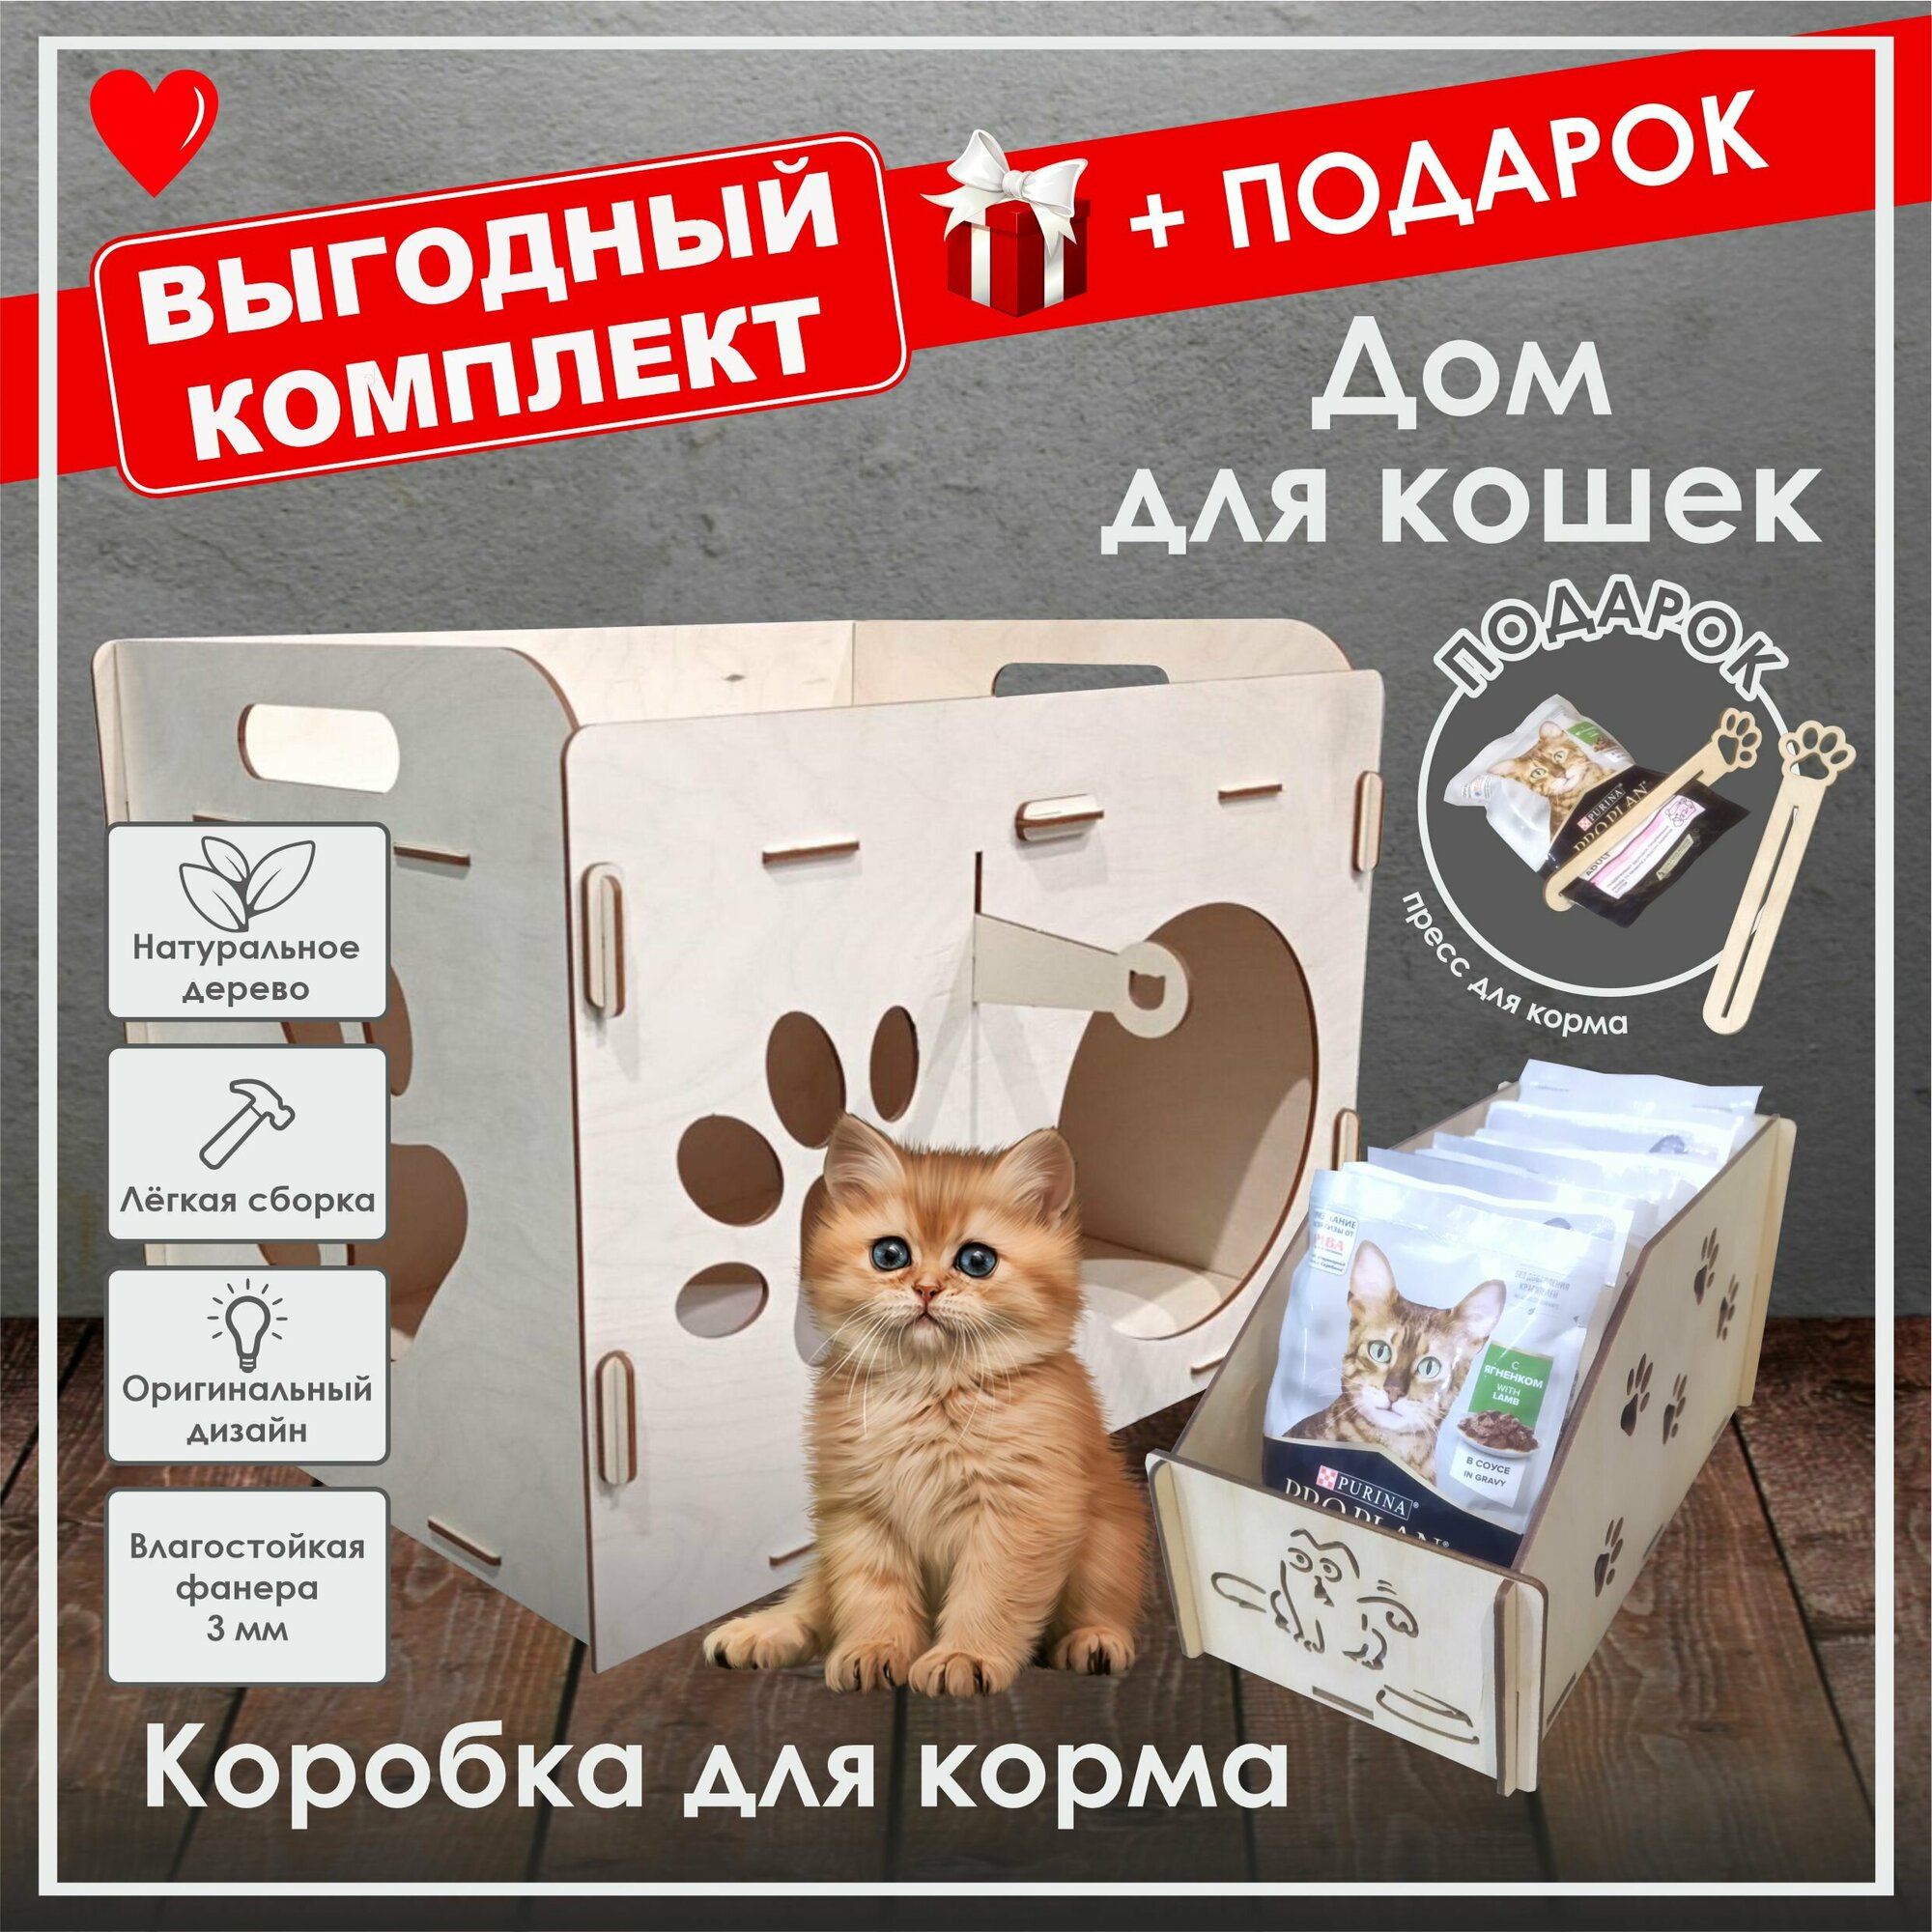 Комплект: Дом для кошки + Коробка для корма +Подарок - фотография № 1